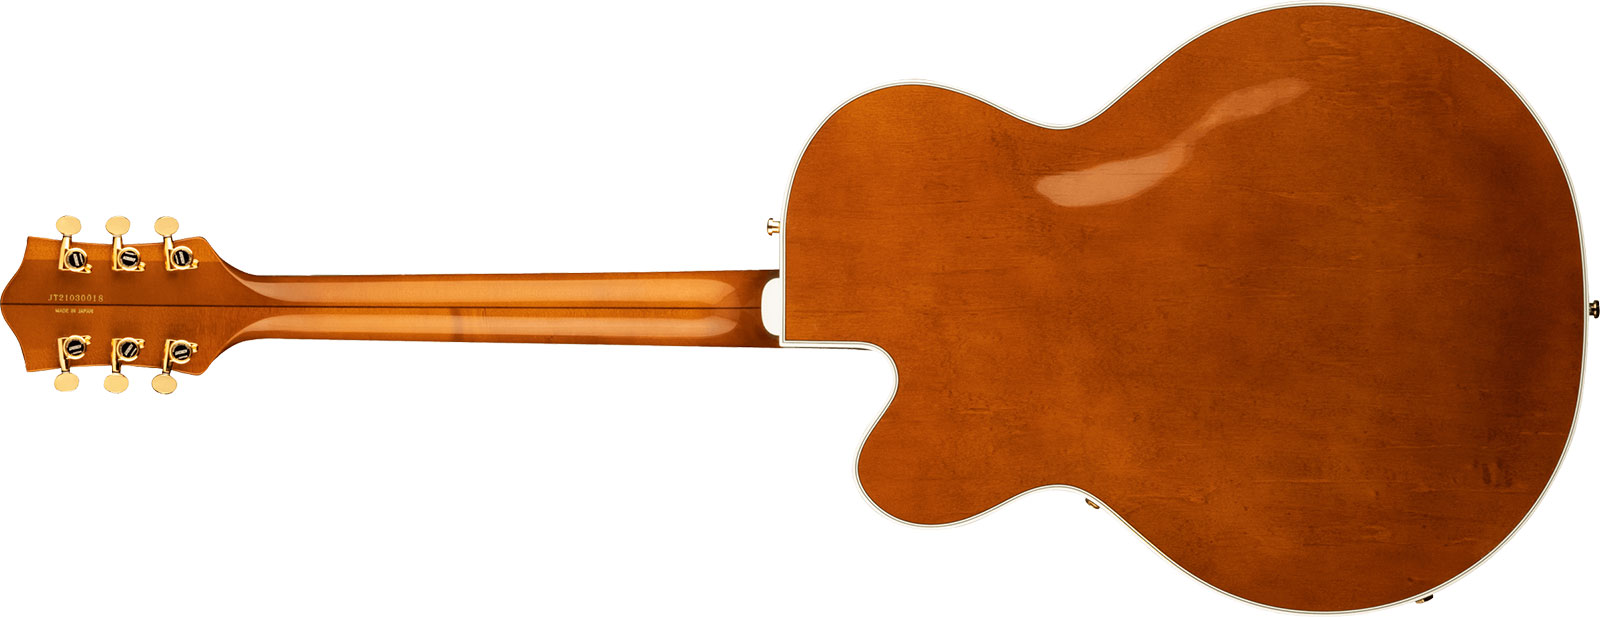 Gretsch G6120tg-ds Players Edition Nashville Pro Jap Bigsby Eb - Roundup Orange - Semi-Hollow E-Gitarre - Variation 1